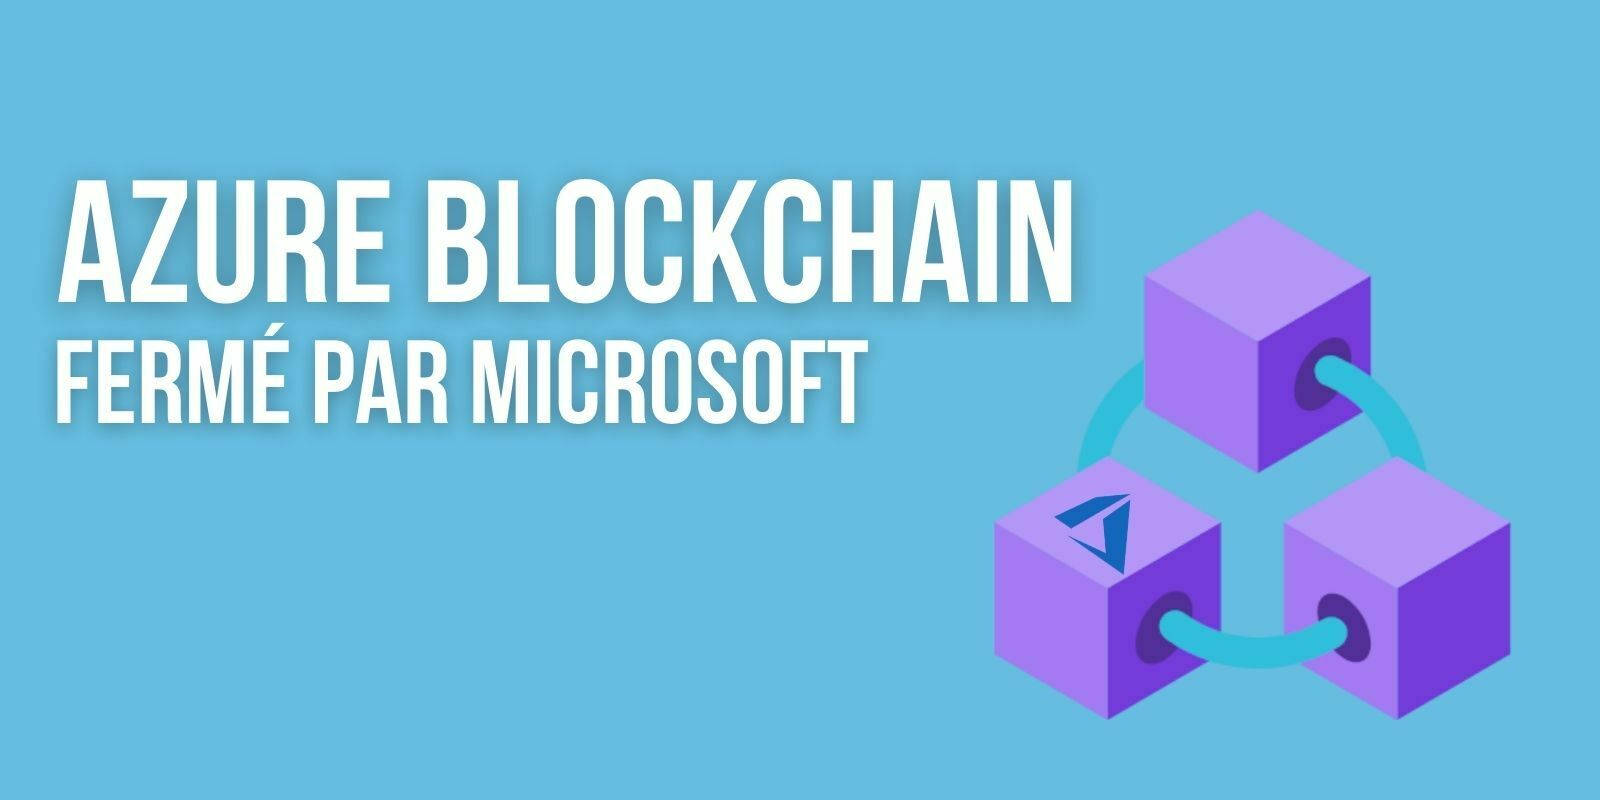 Microsoft ferme discrètement son service Azure Blockchain